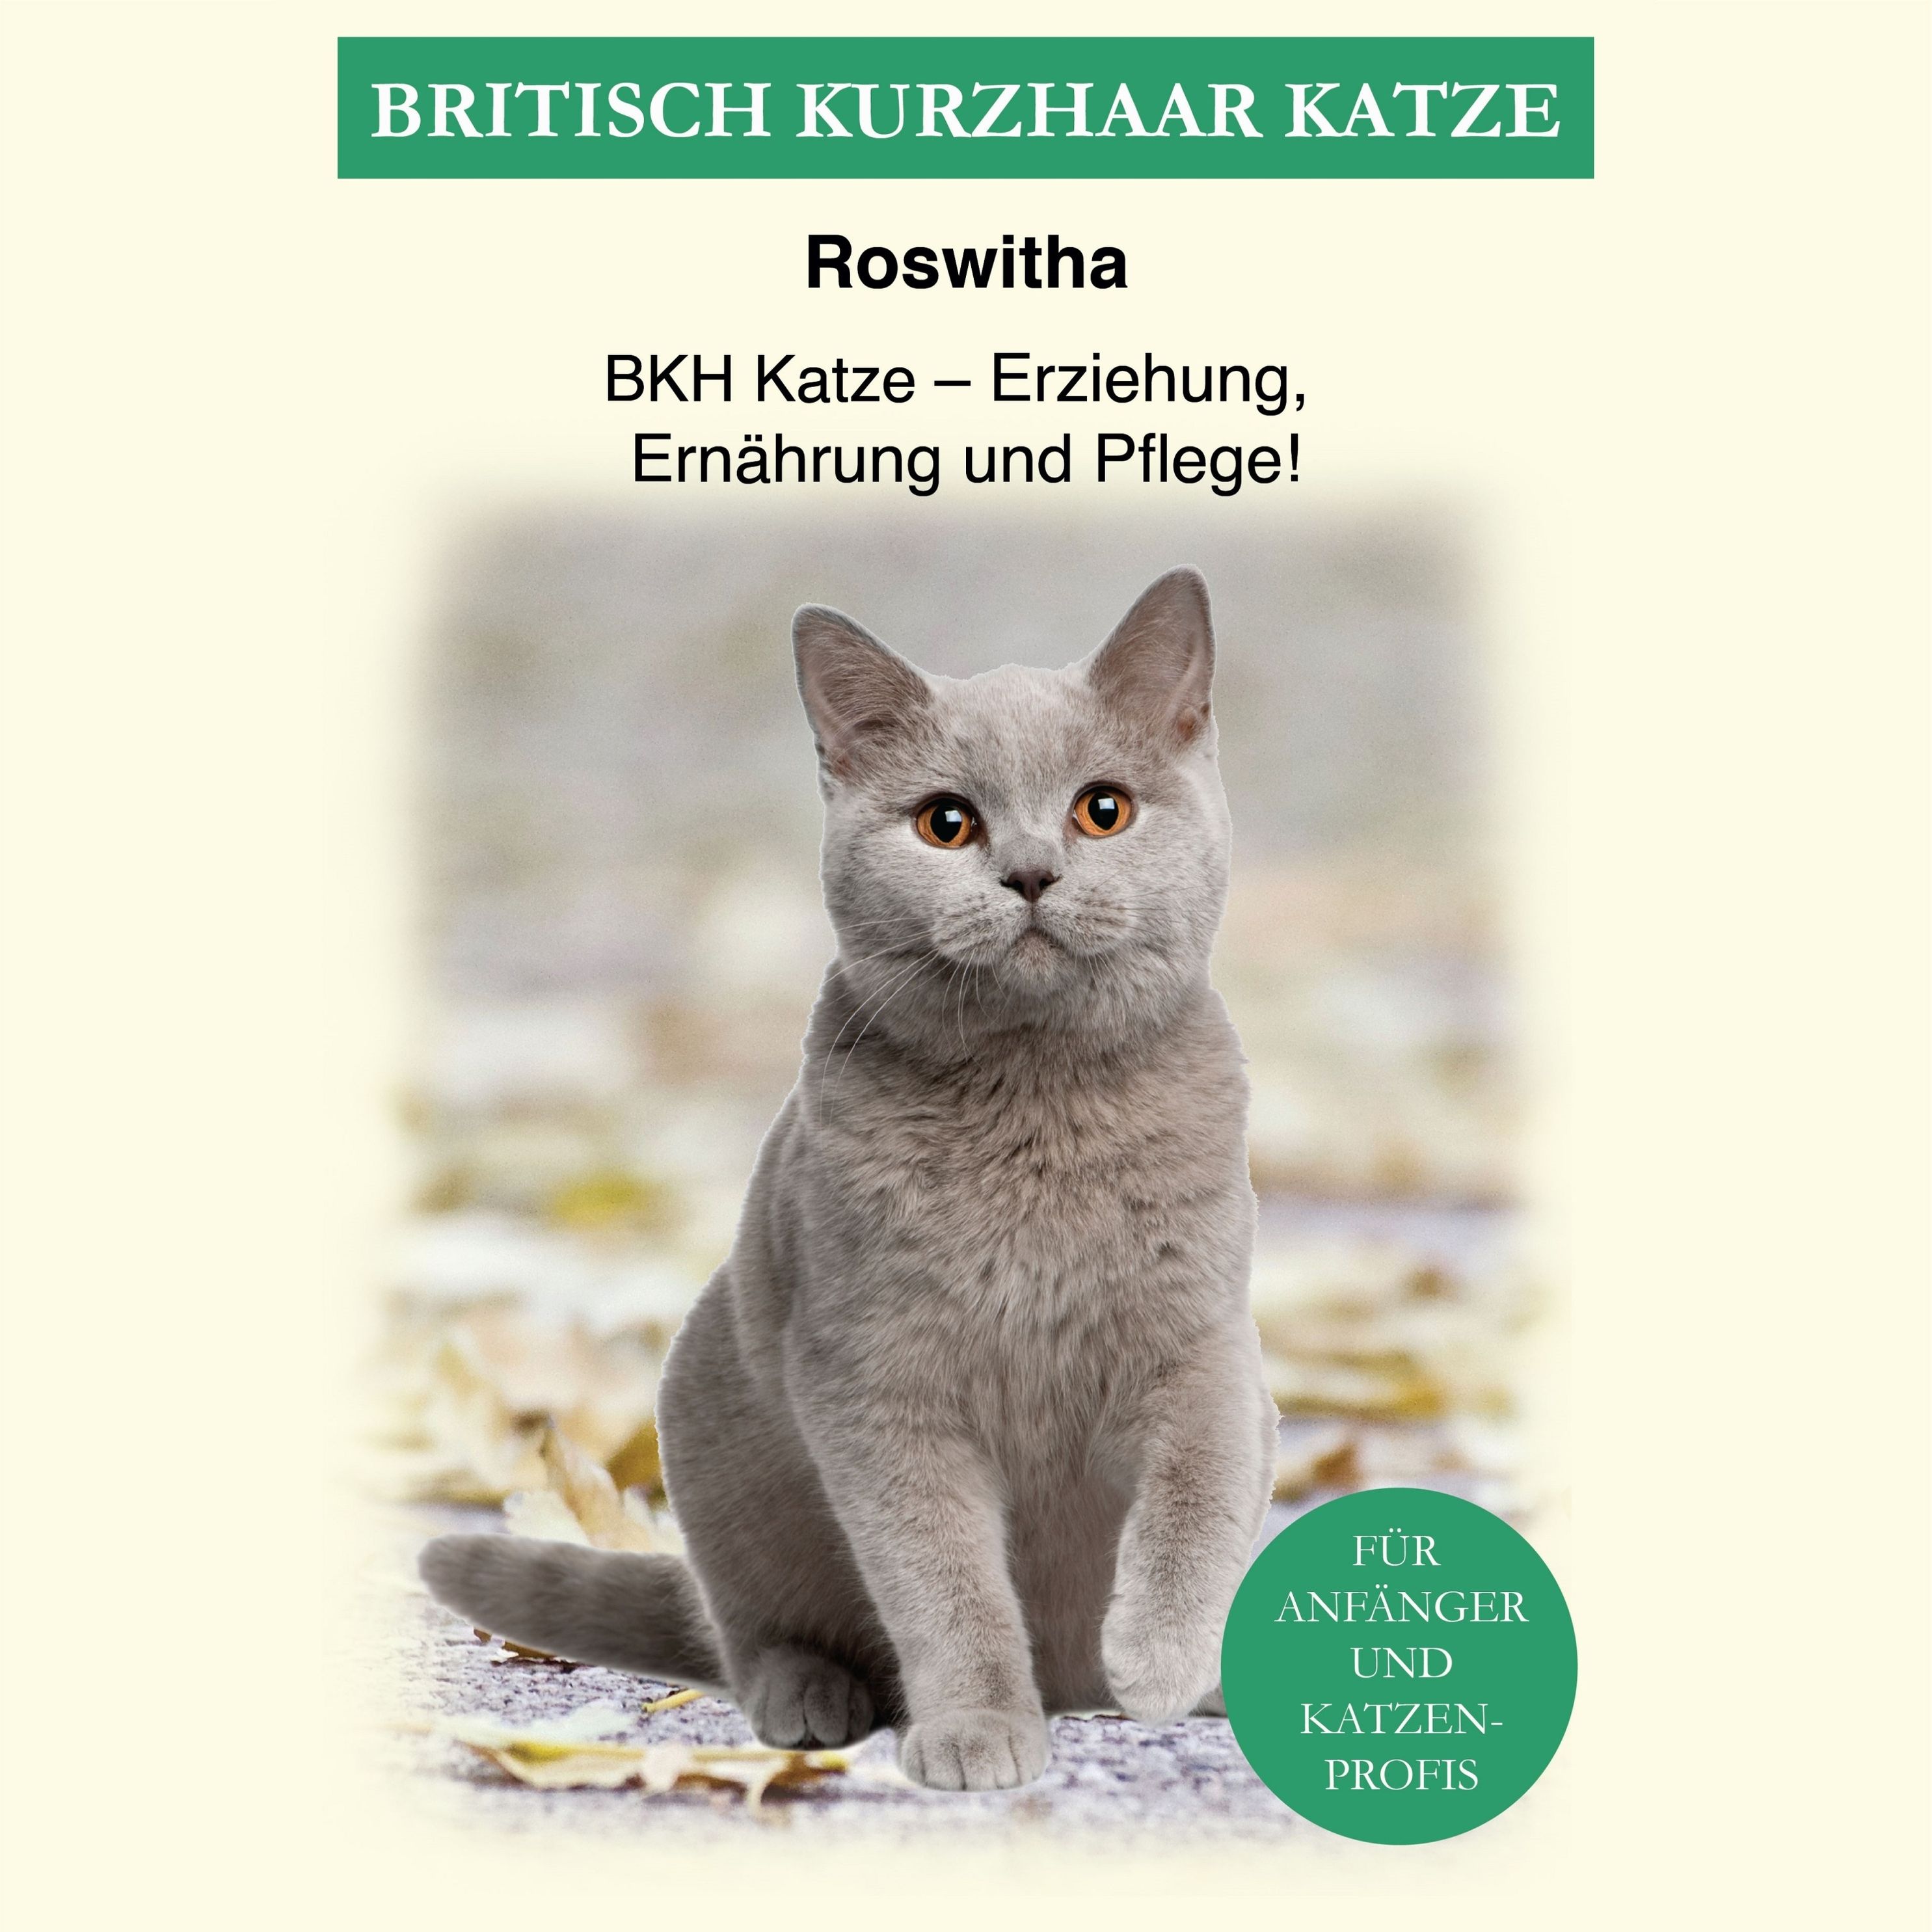 Britisch Kurzhaar Katze Hörbuch downloaden bei Weltbild.at